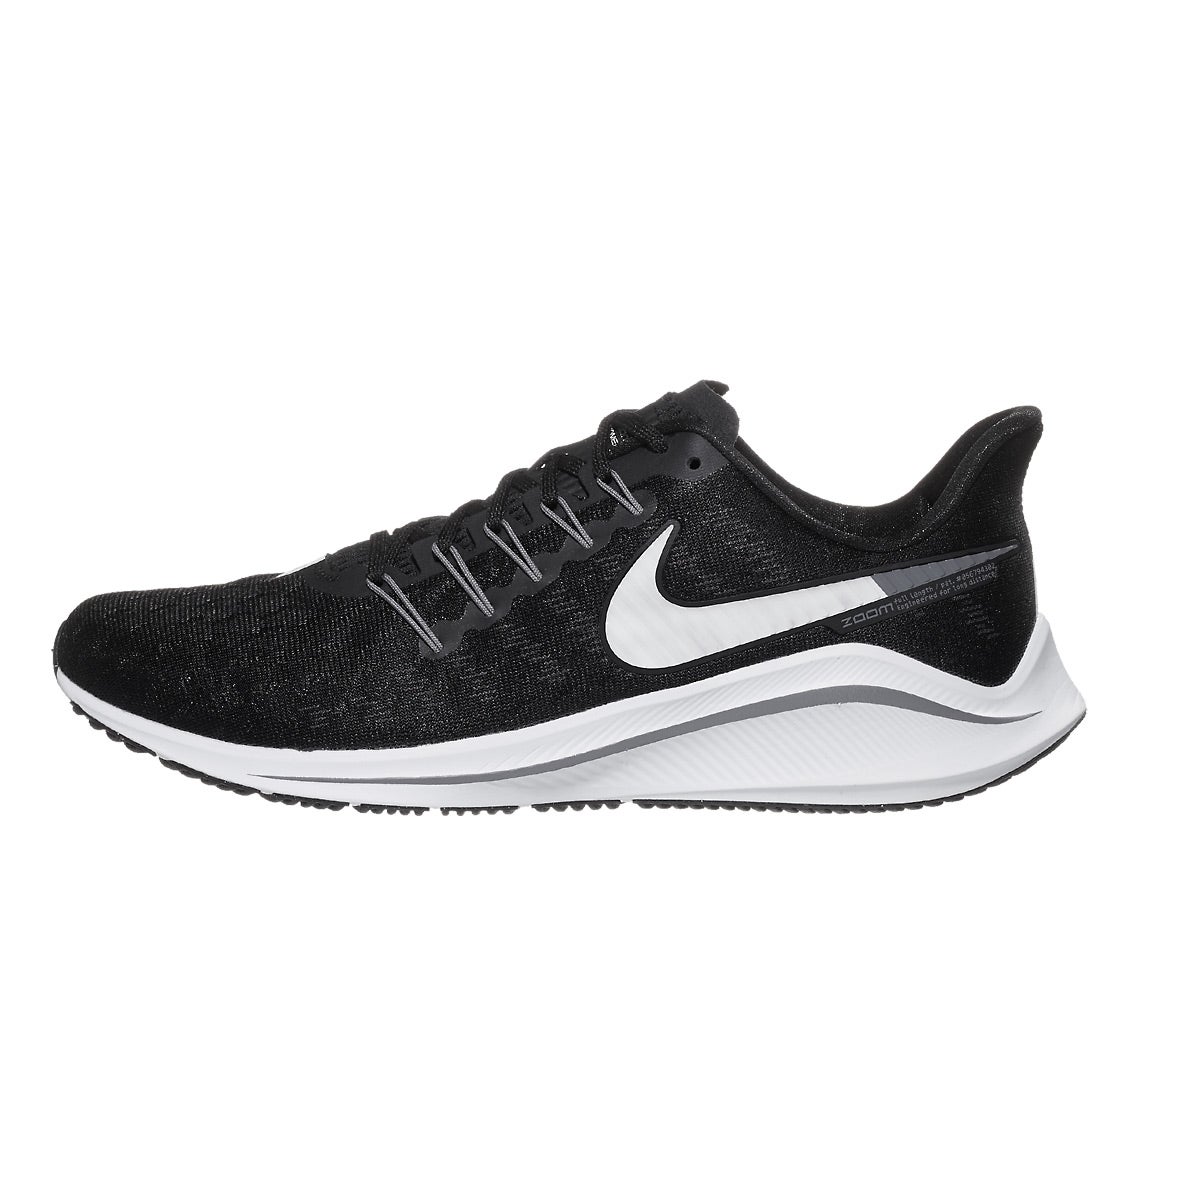 Nike Zoom Vomero 14 Men's Shoes Black/White/Grey 360° View | Running ...